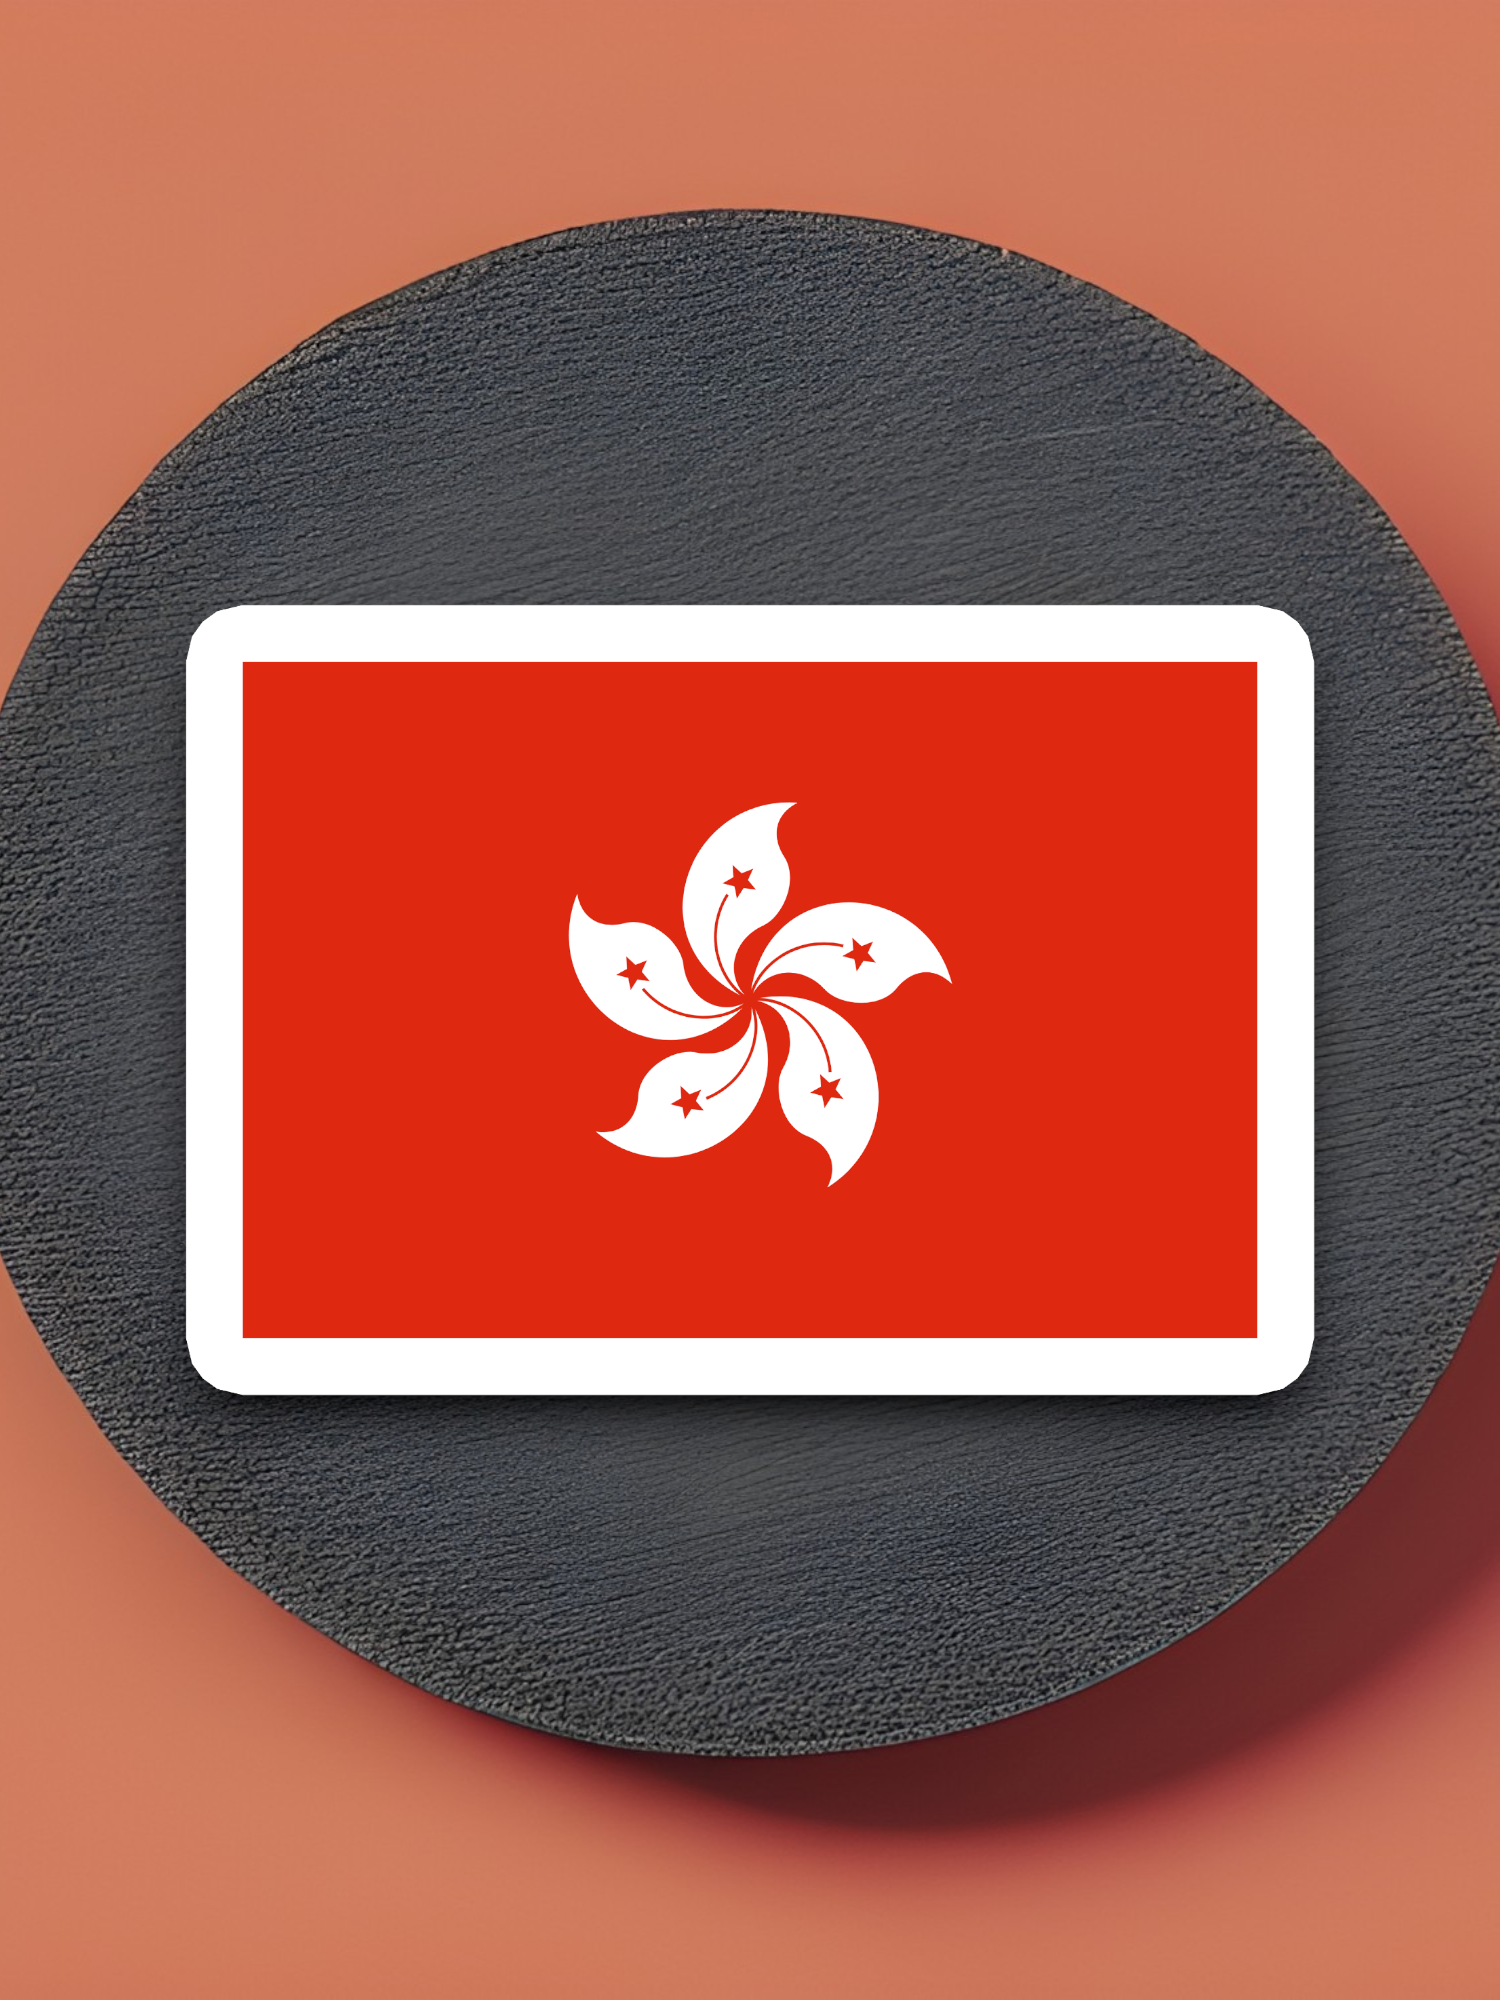 Hong Kong Flag - International Country Flag Sticker